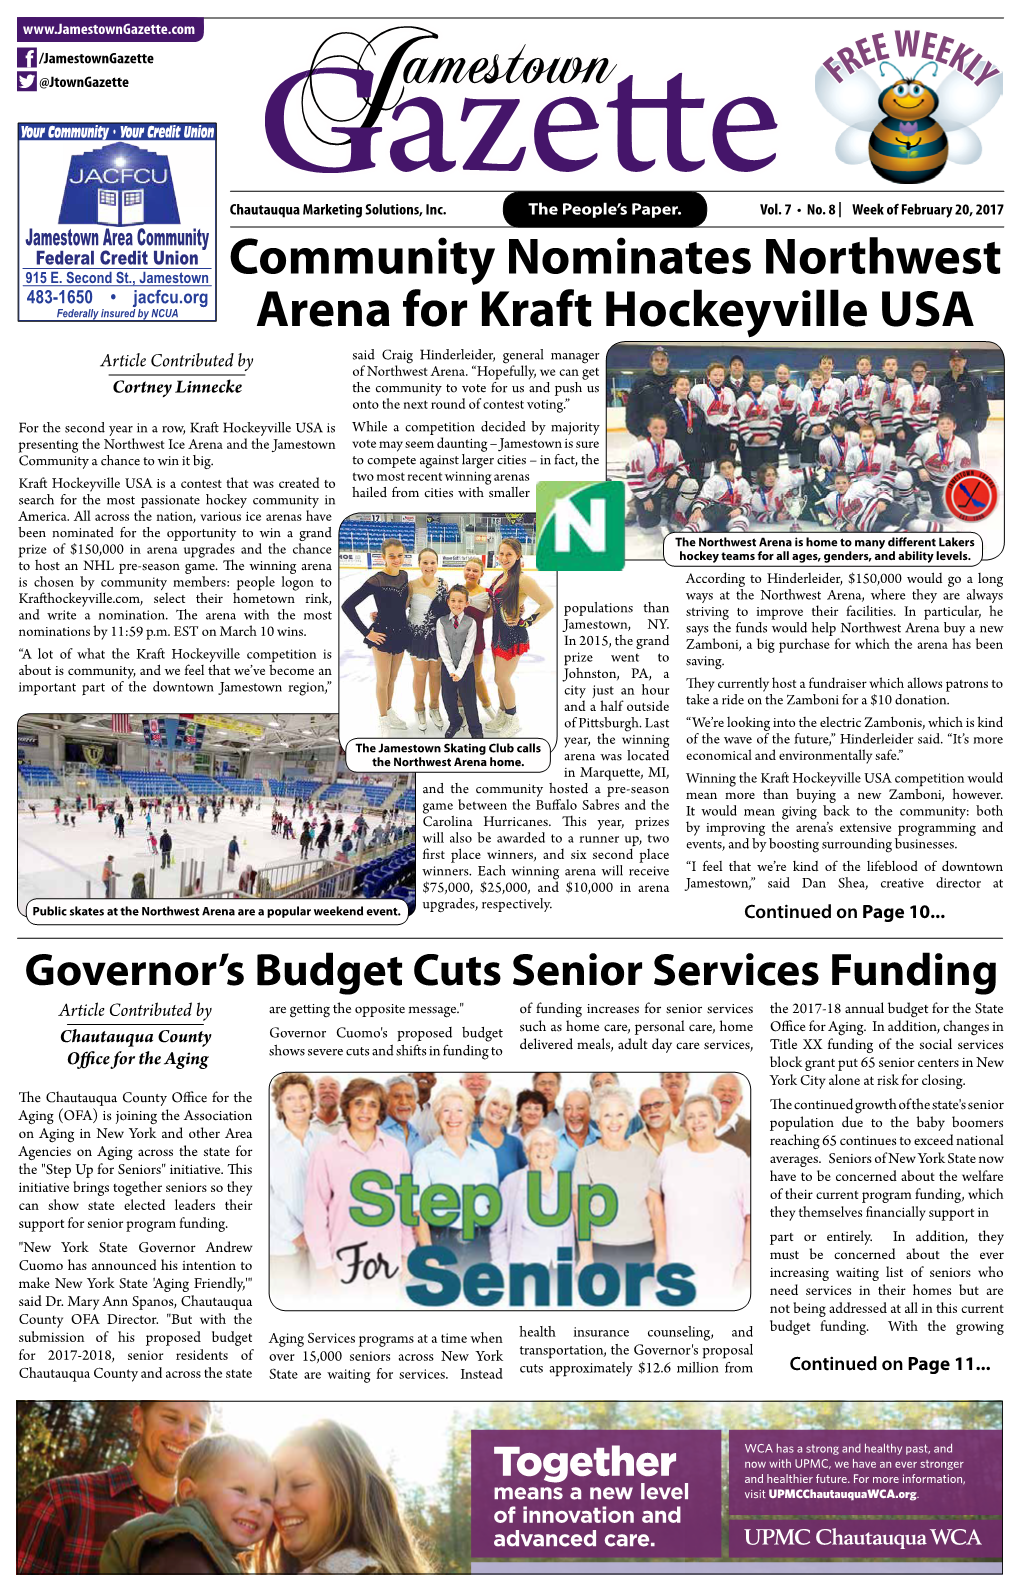 Community Nominates Northwest Arena for Kraft Hockeyville